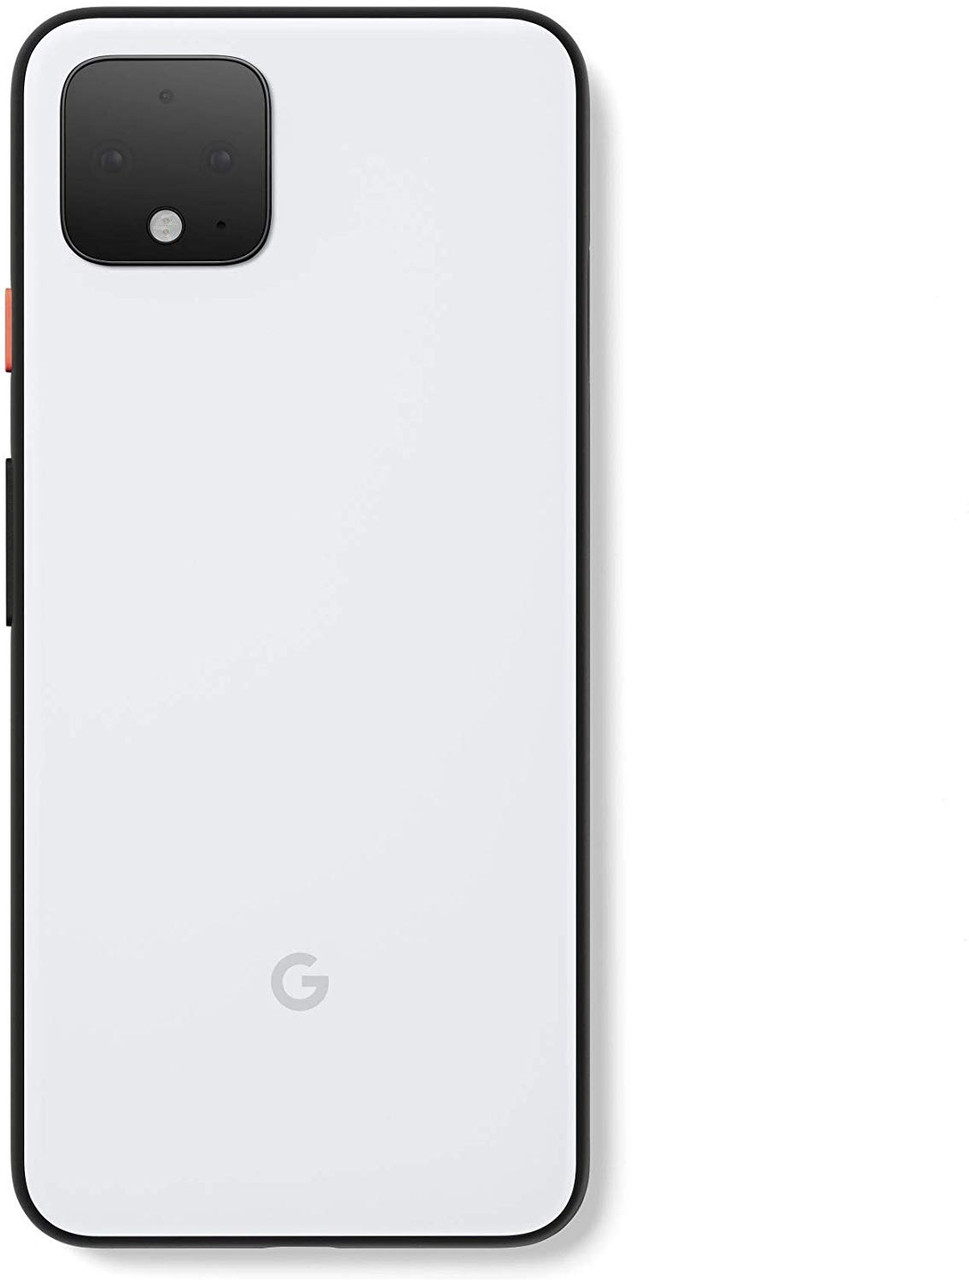 Google Pixel 4 64GB Unlocked GSM/CDMA - US warranty